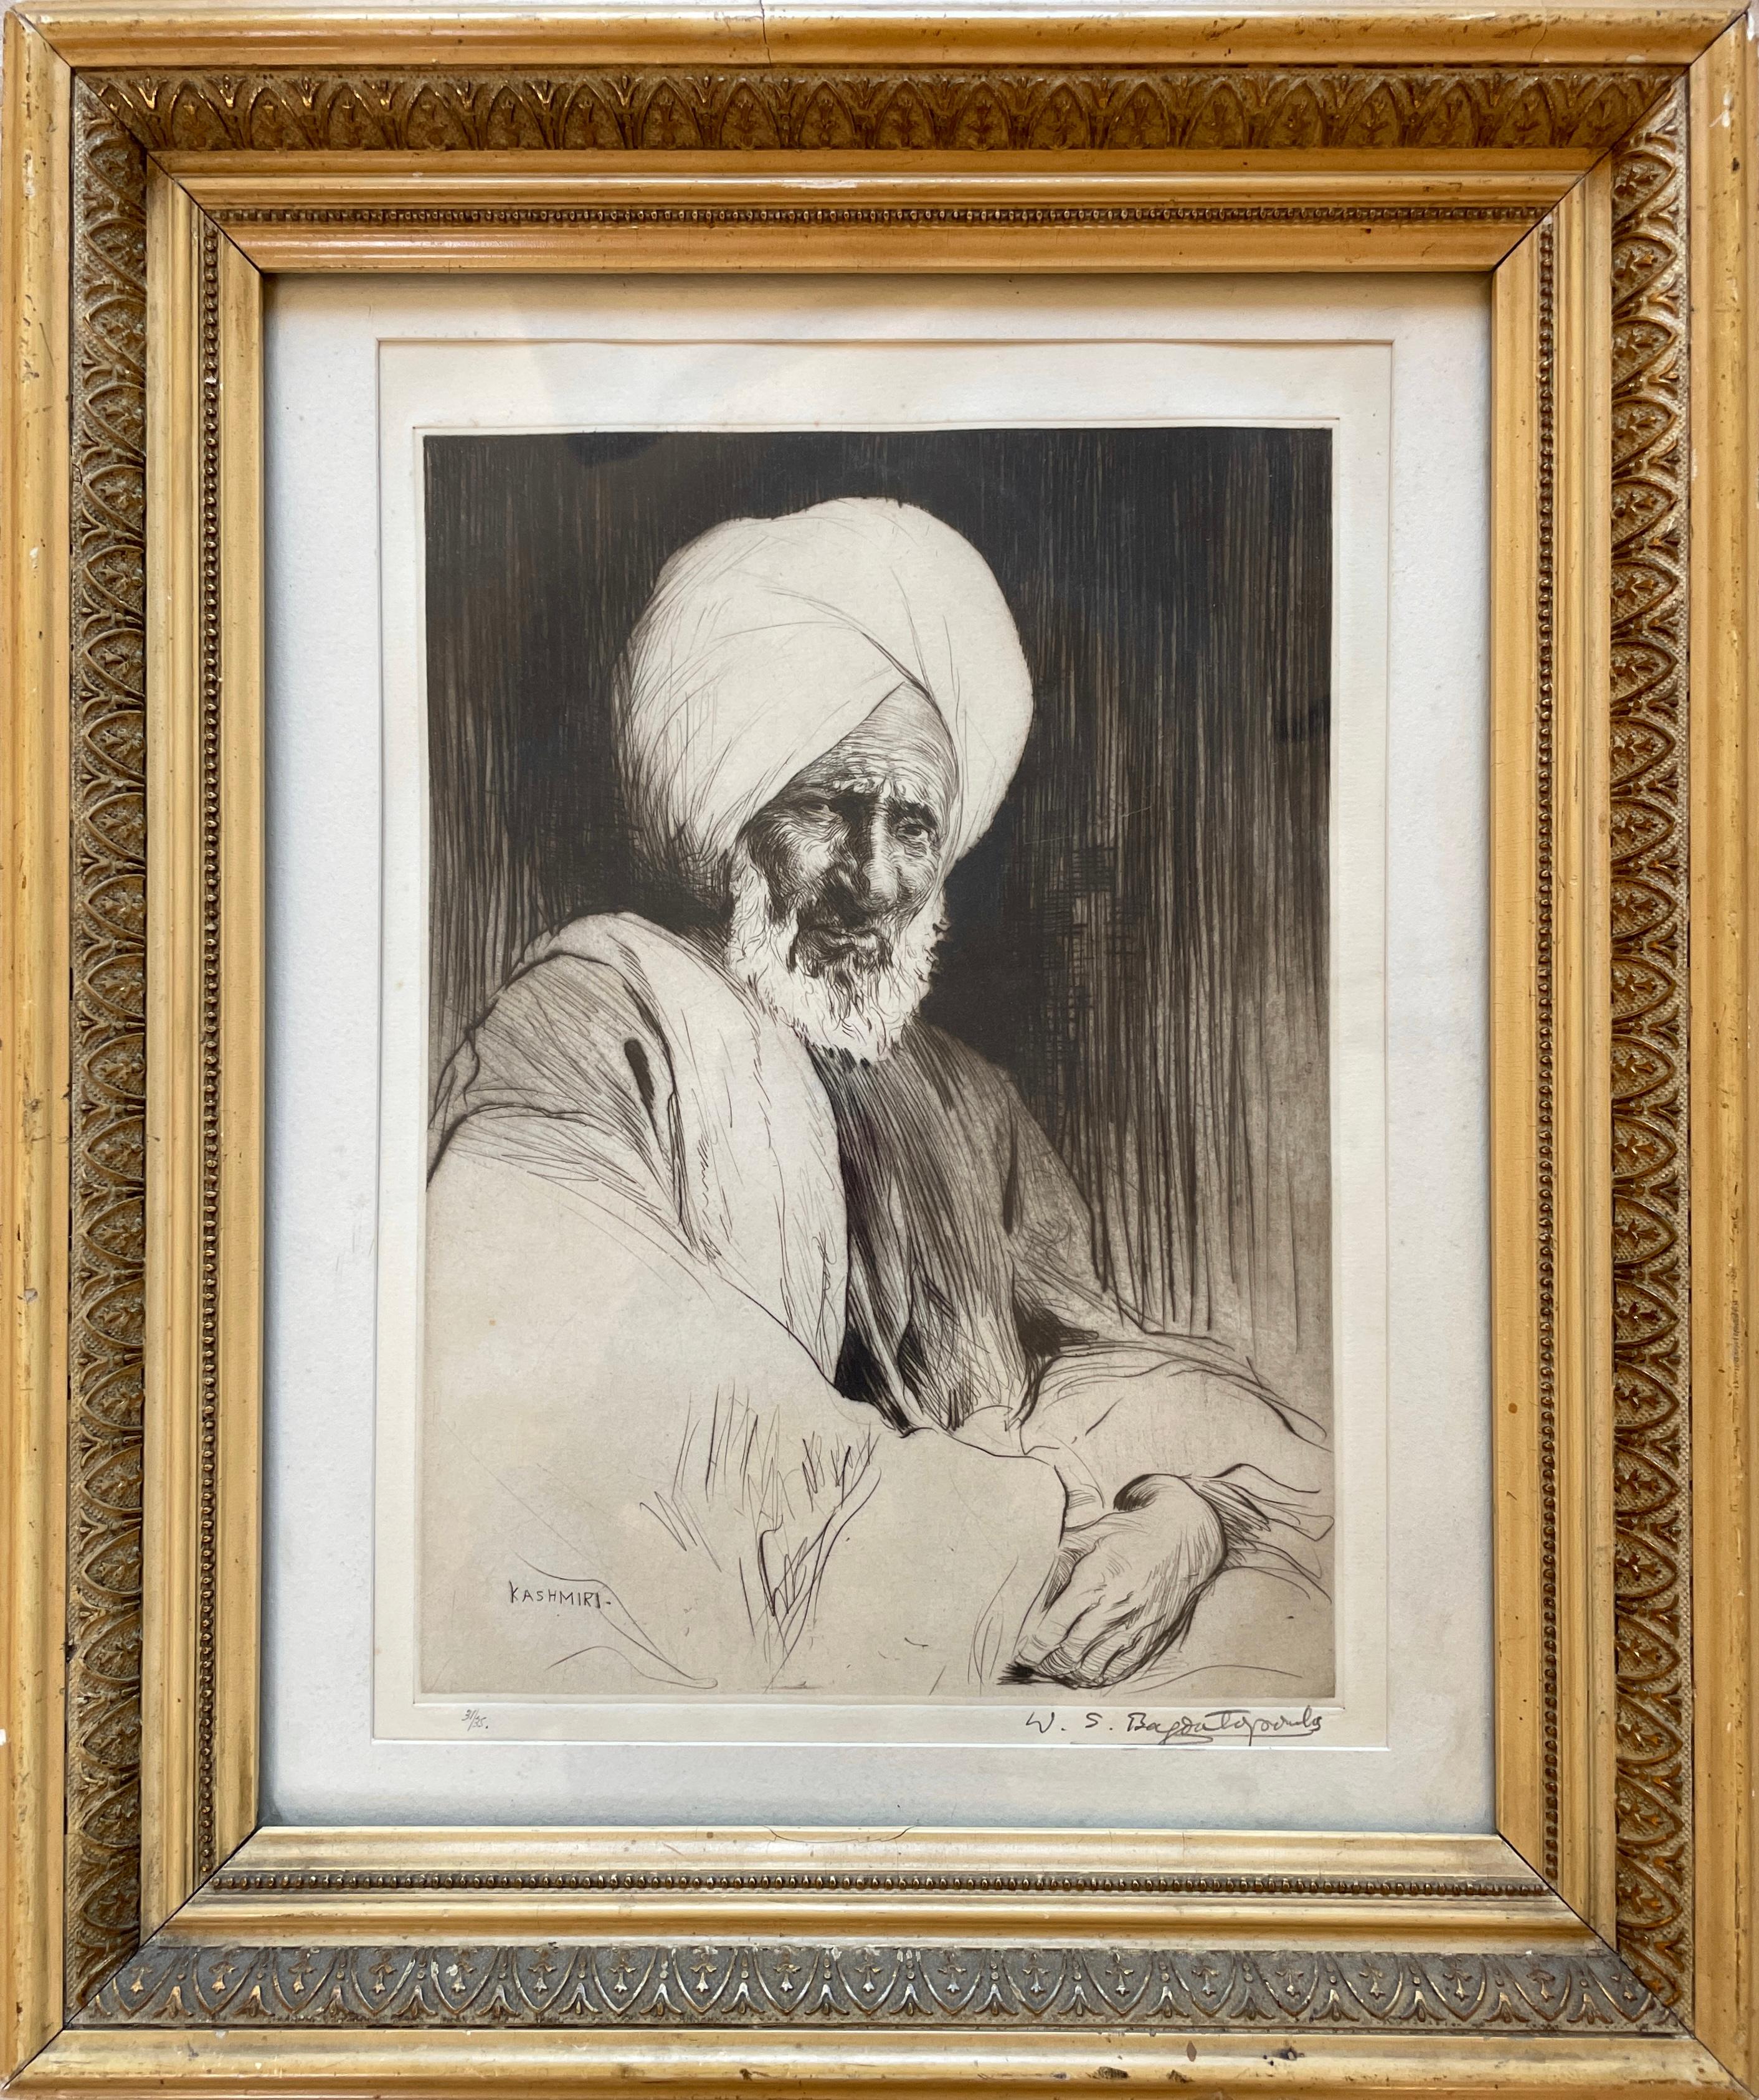 William Spencer Bagdatopoulos Portrait Print - Early 20th century Ltd Edition 33/35 Etching Indian Art Kashmiri Man Portrait  